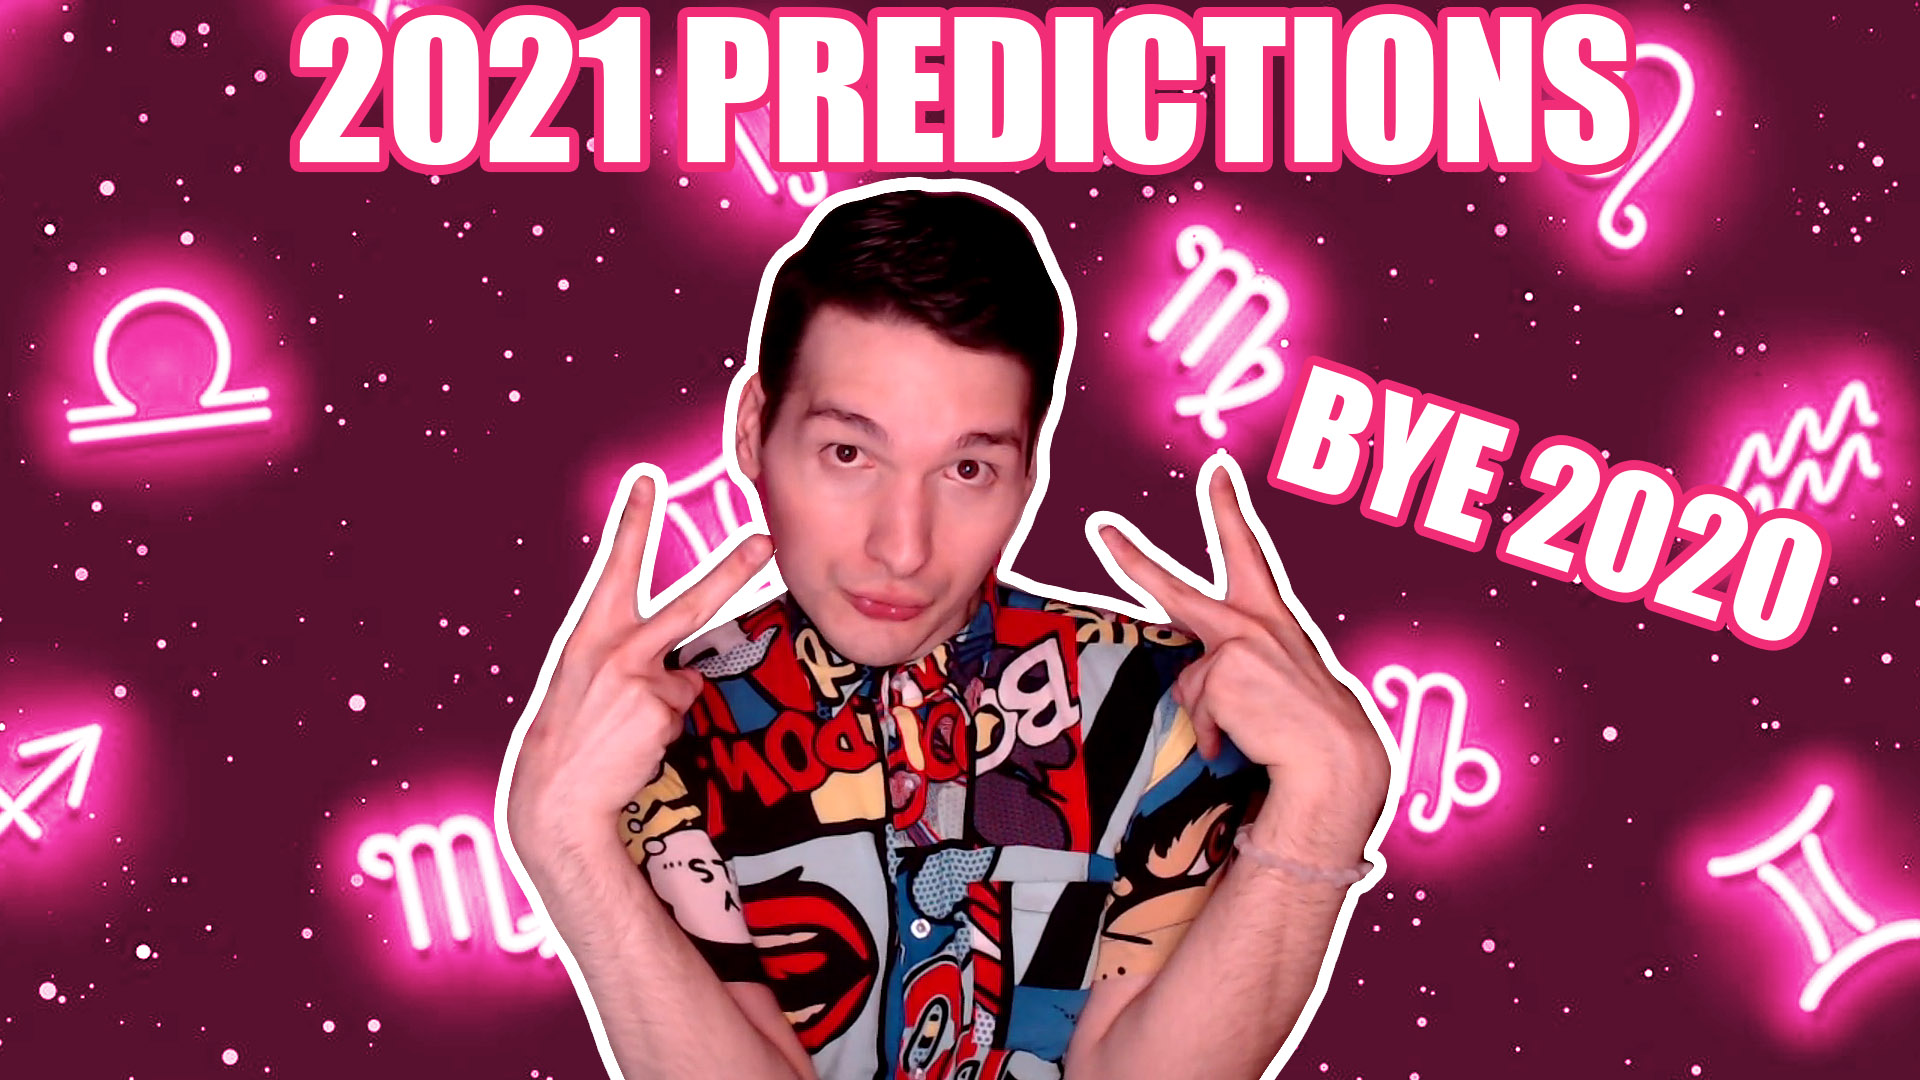 2021 psychic predictions